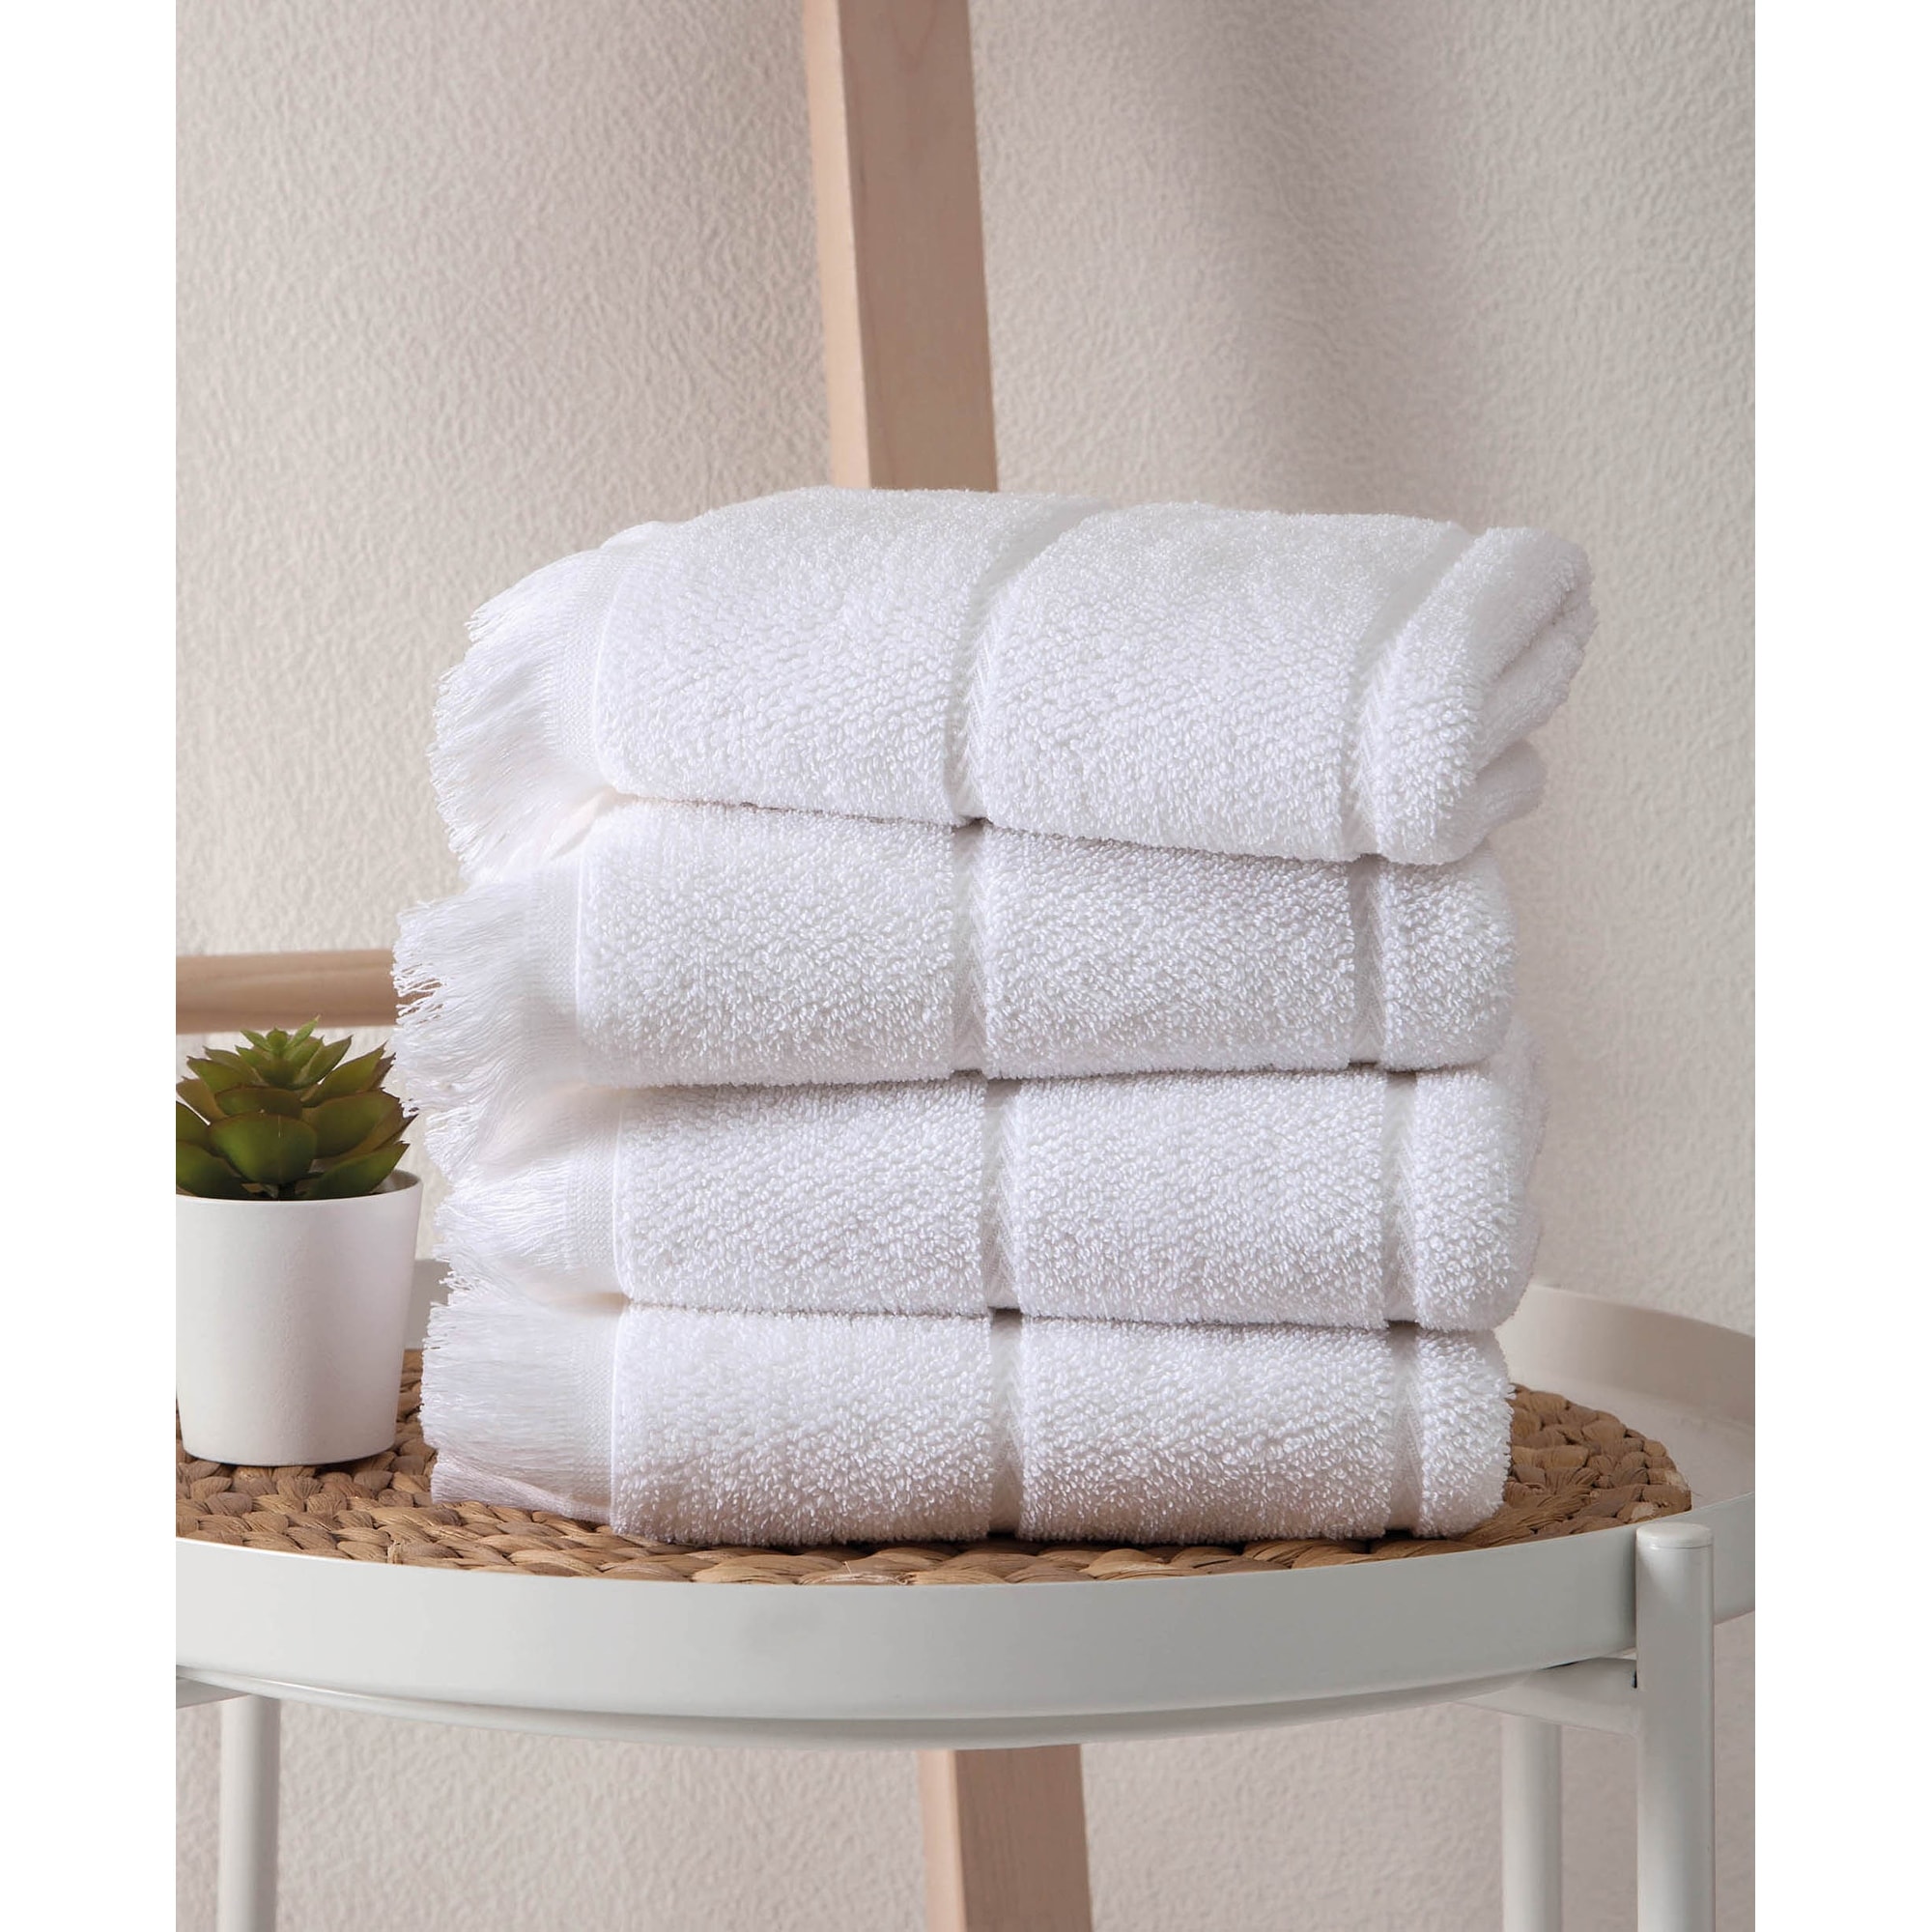 100% Genuine Turkish Cotton Bedazzle Towel Sets (Set of 6)